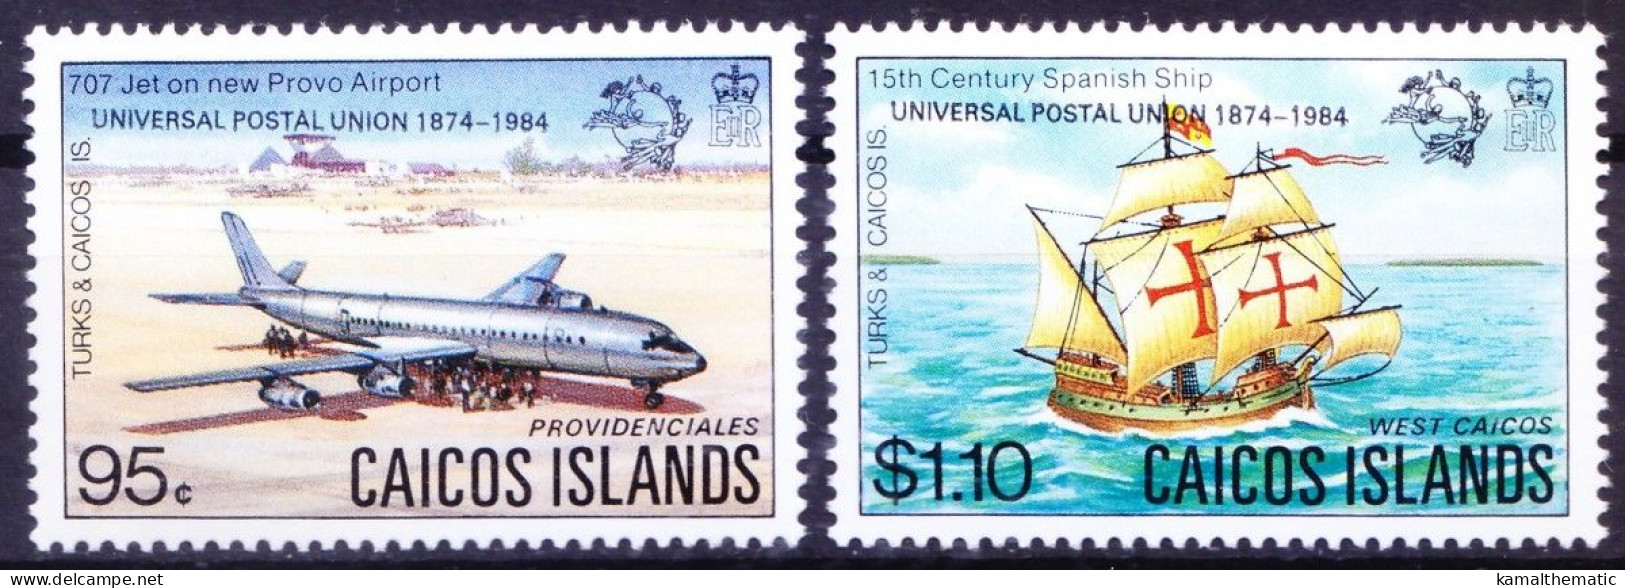 Caicos Islands 1984 MNH 2v, U.P.U. Hamburg, Overprint - UPU (Wereldpostunie)